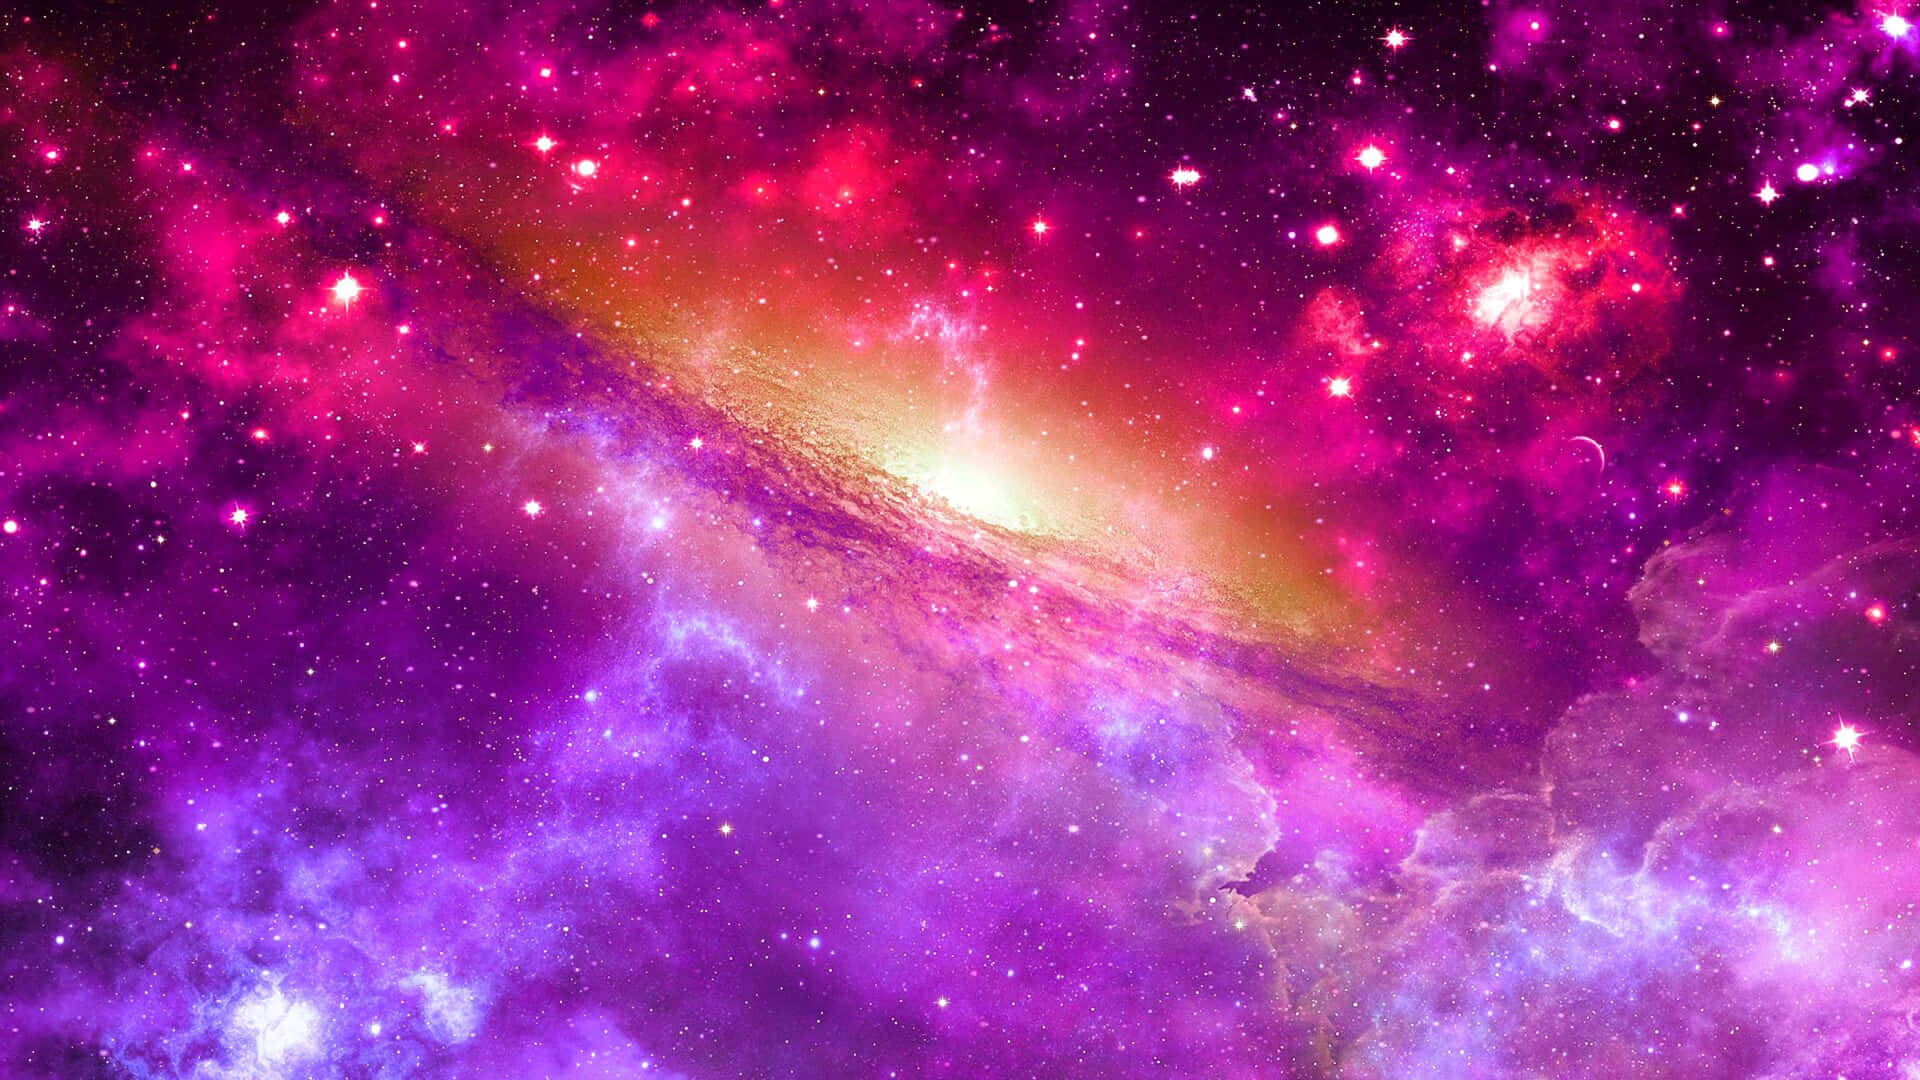 4k Universe In Color Wallpaper